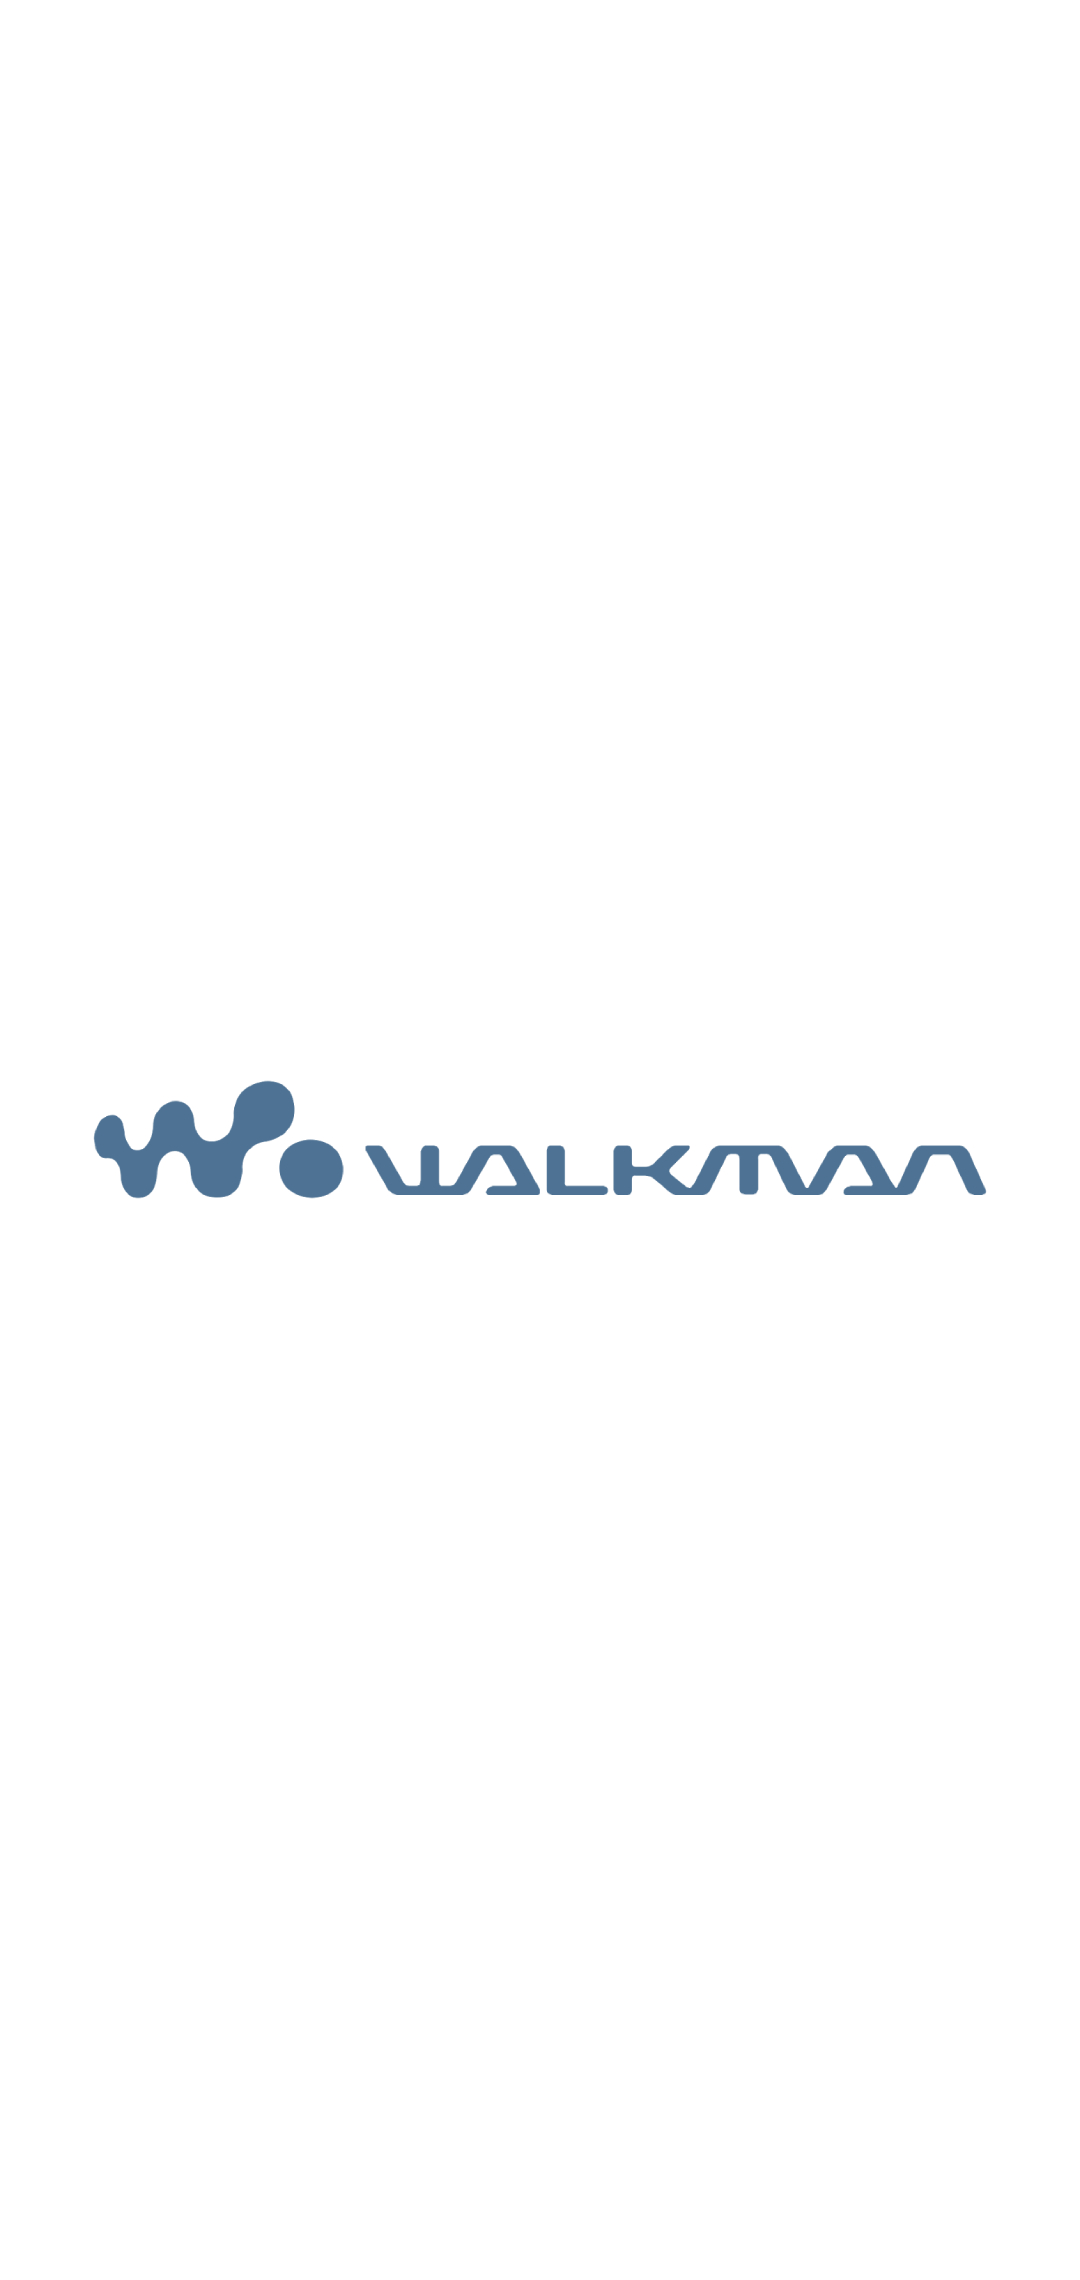 Walkman ウォークマン Moto G8 Plus スマホ壁紙 待ち受け スマラン